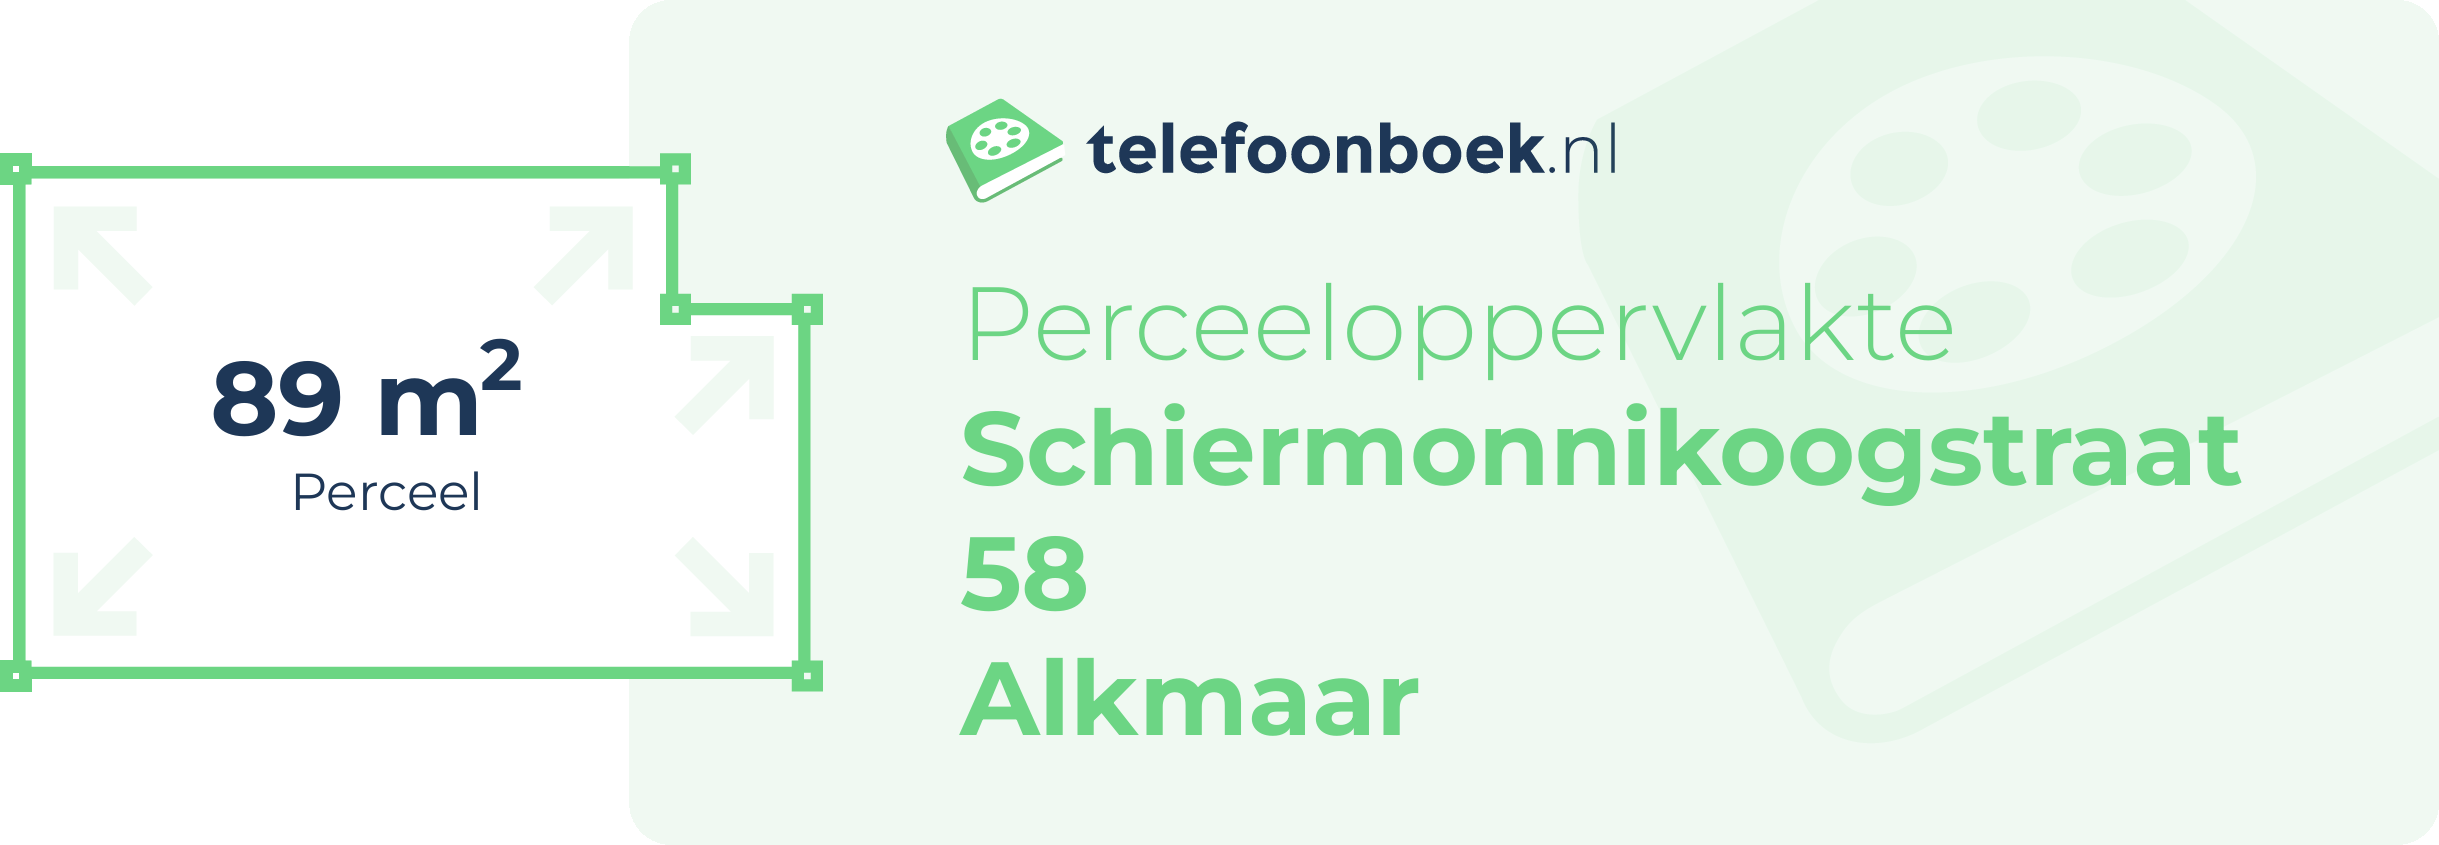 Perceeloppervlakte Schiermonnikoogstraat 58 Alkmaar